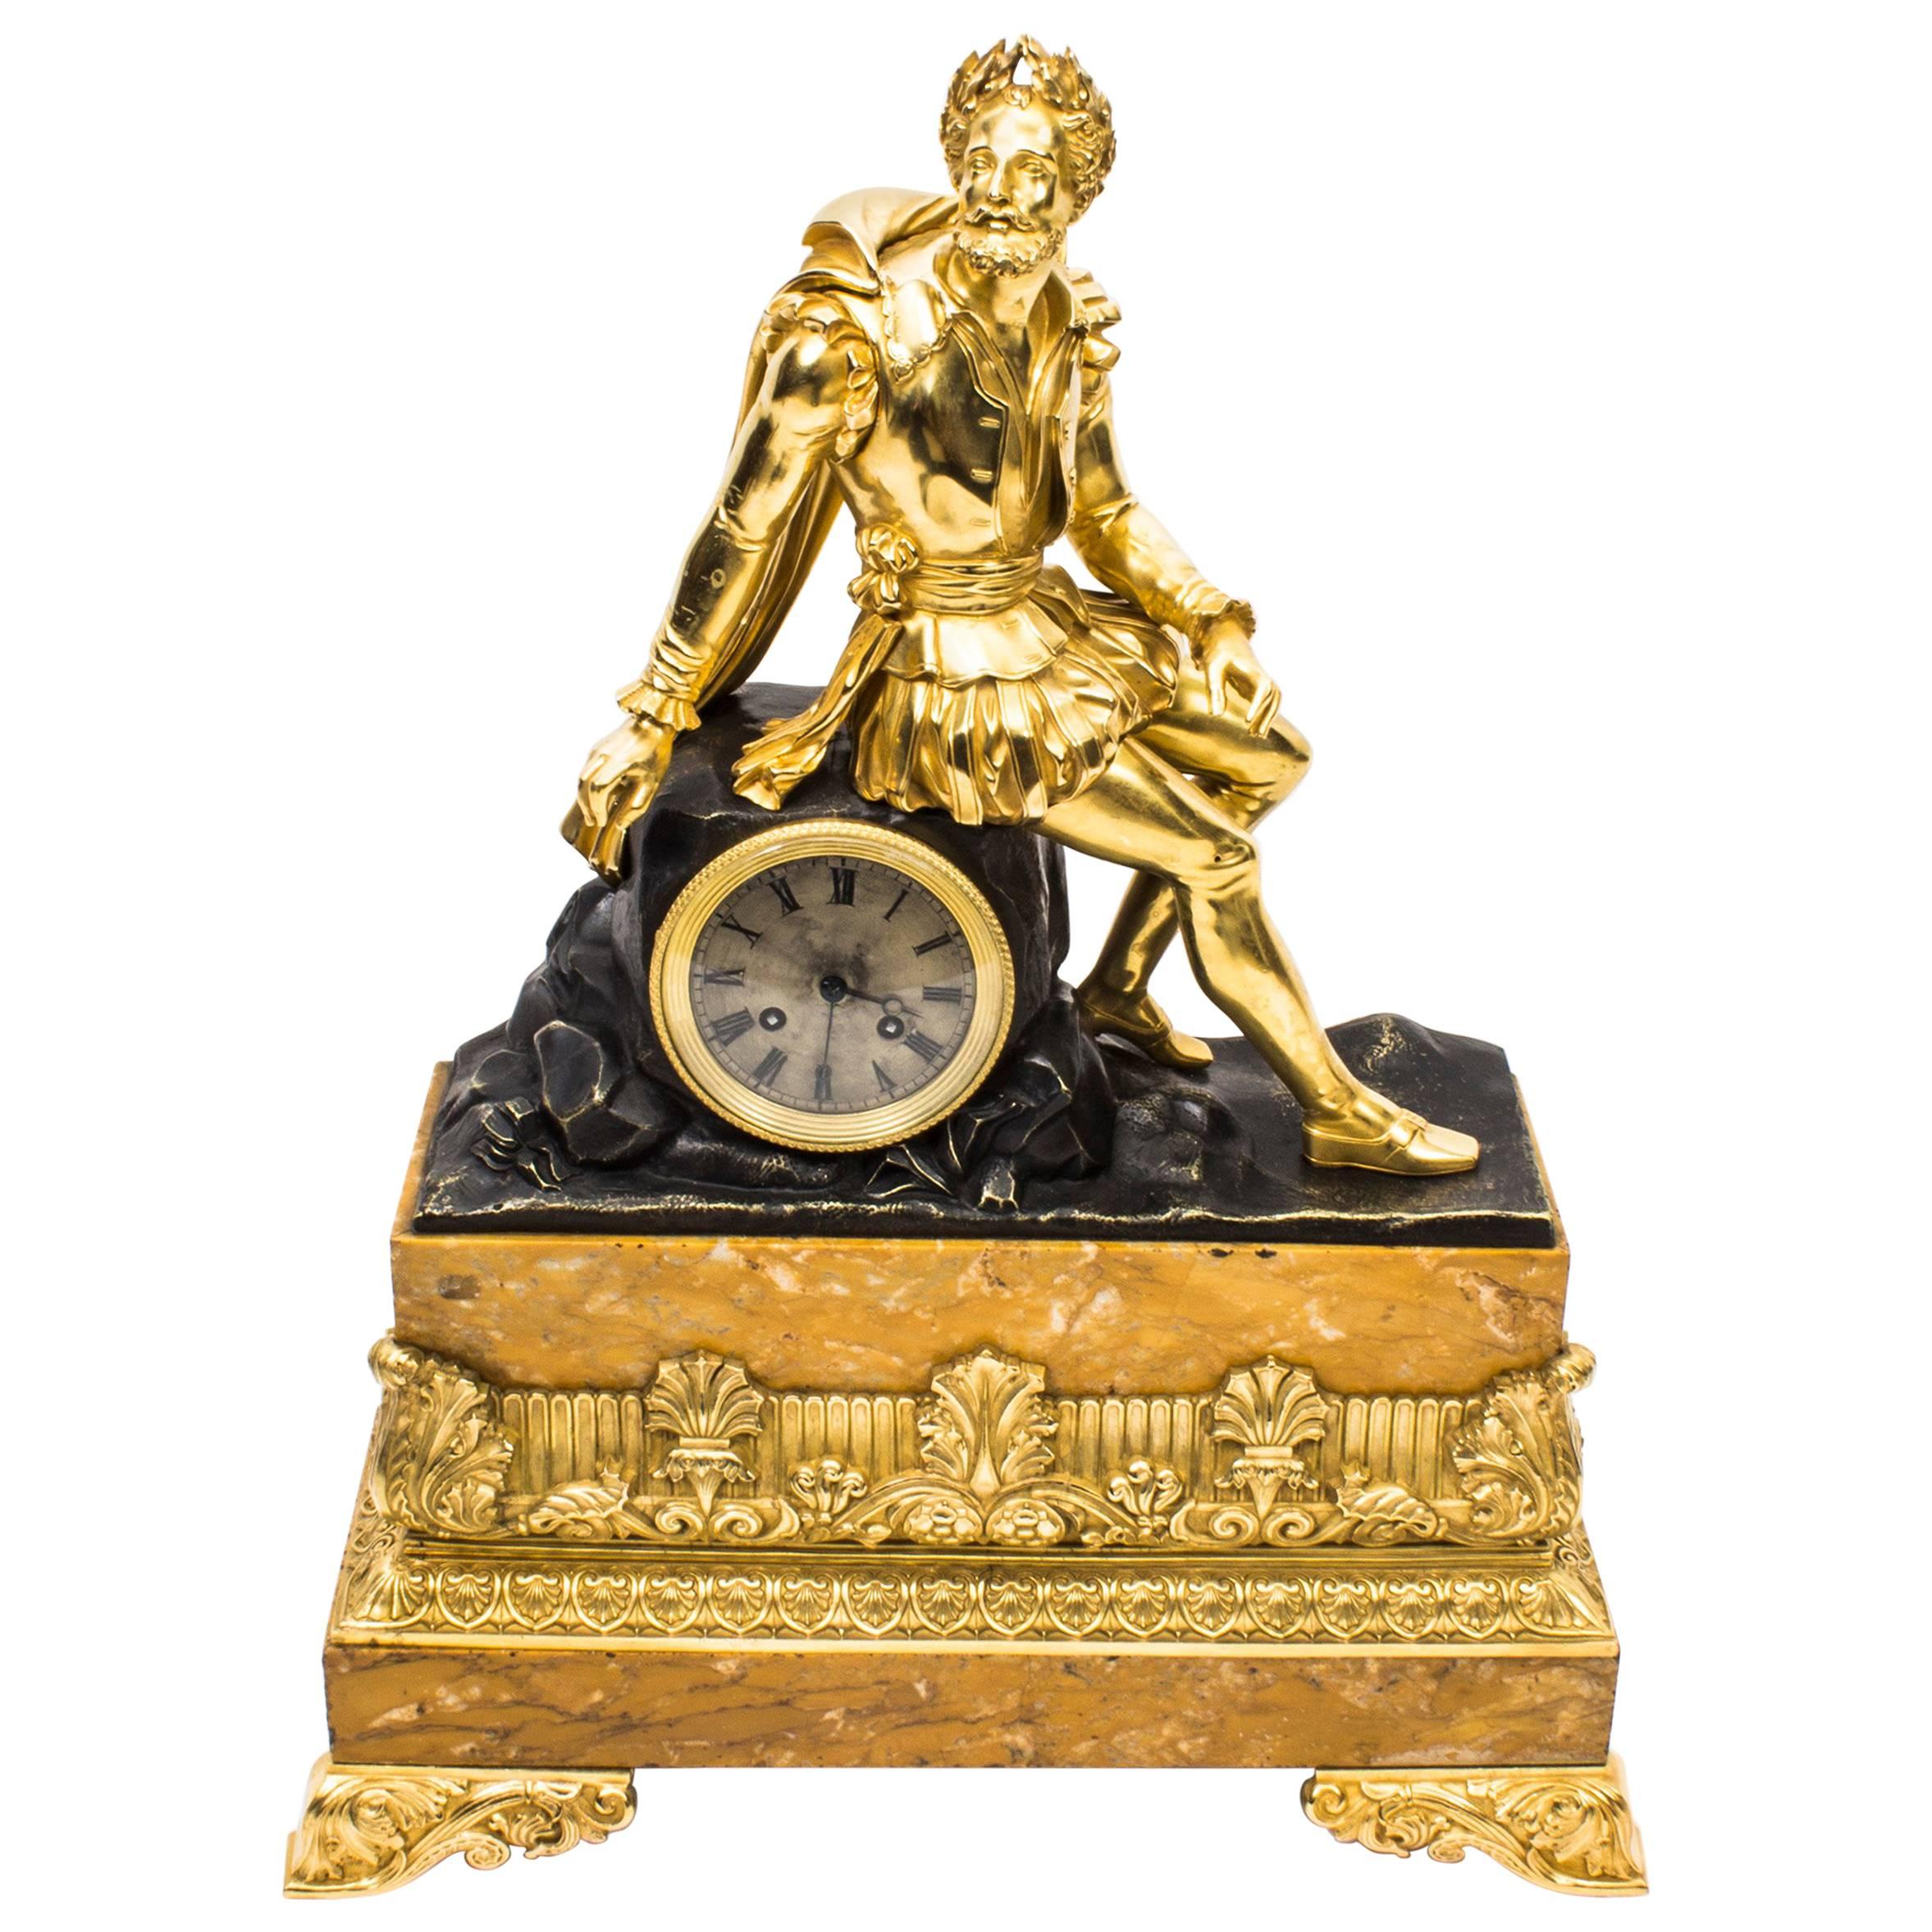 19th Century French Ormolu and Bronze Mantel Clock